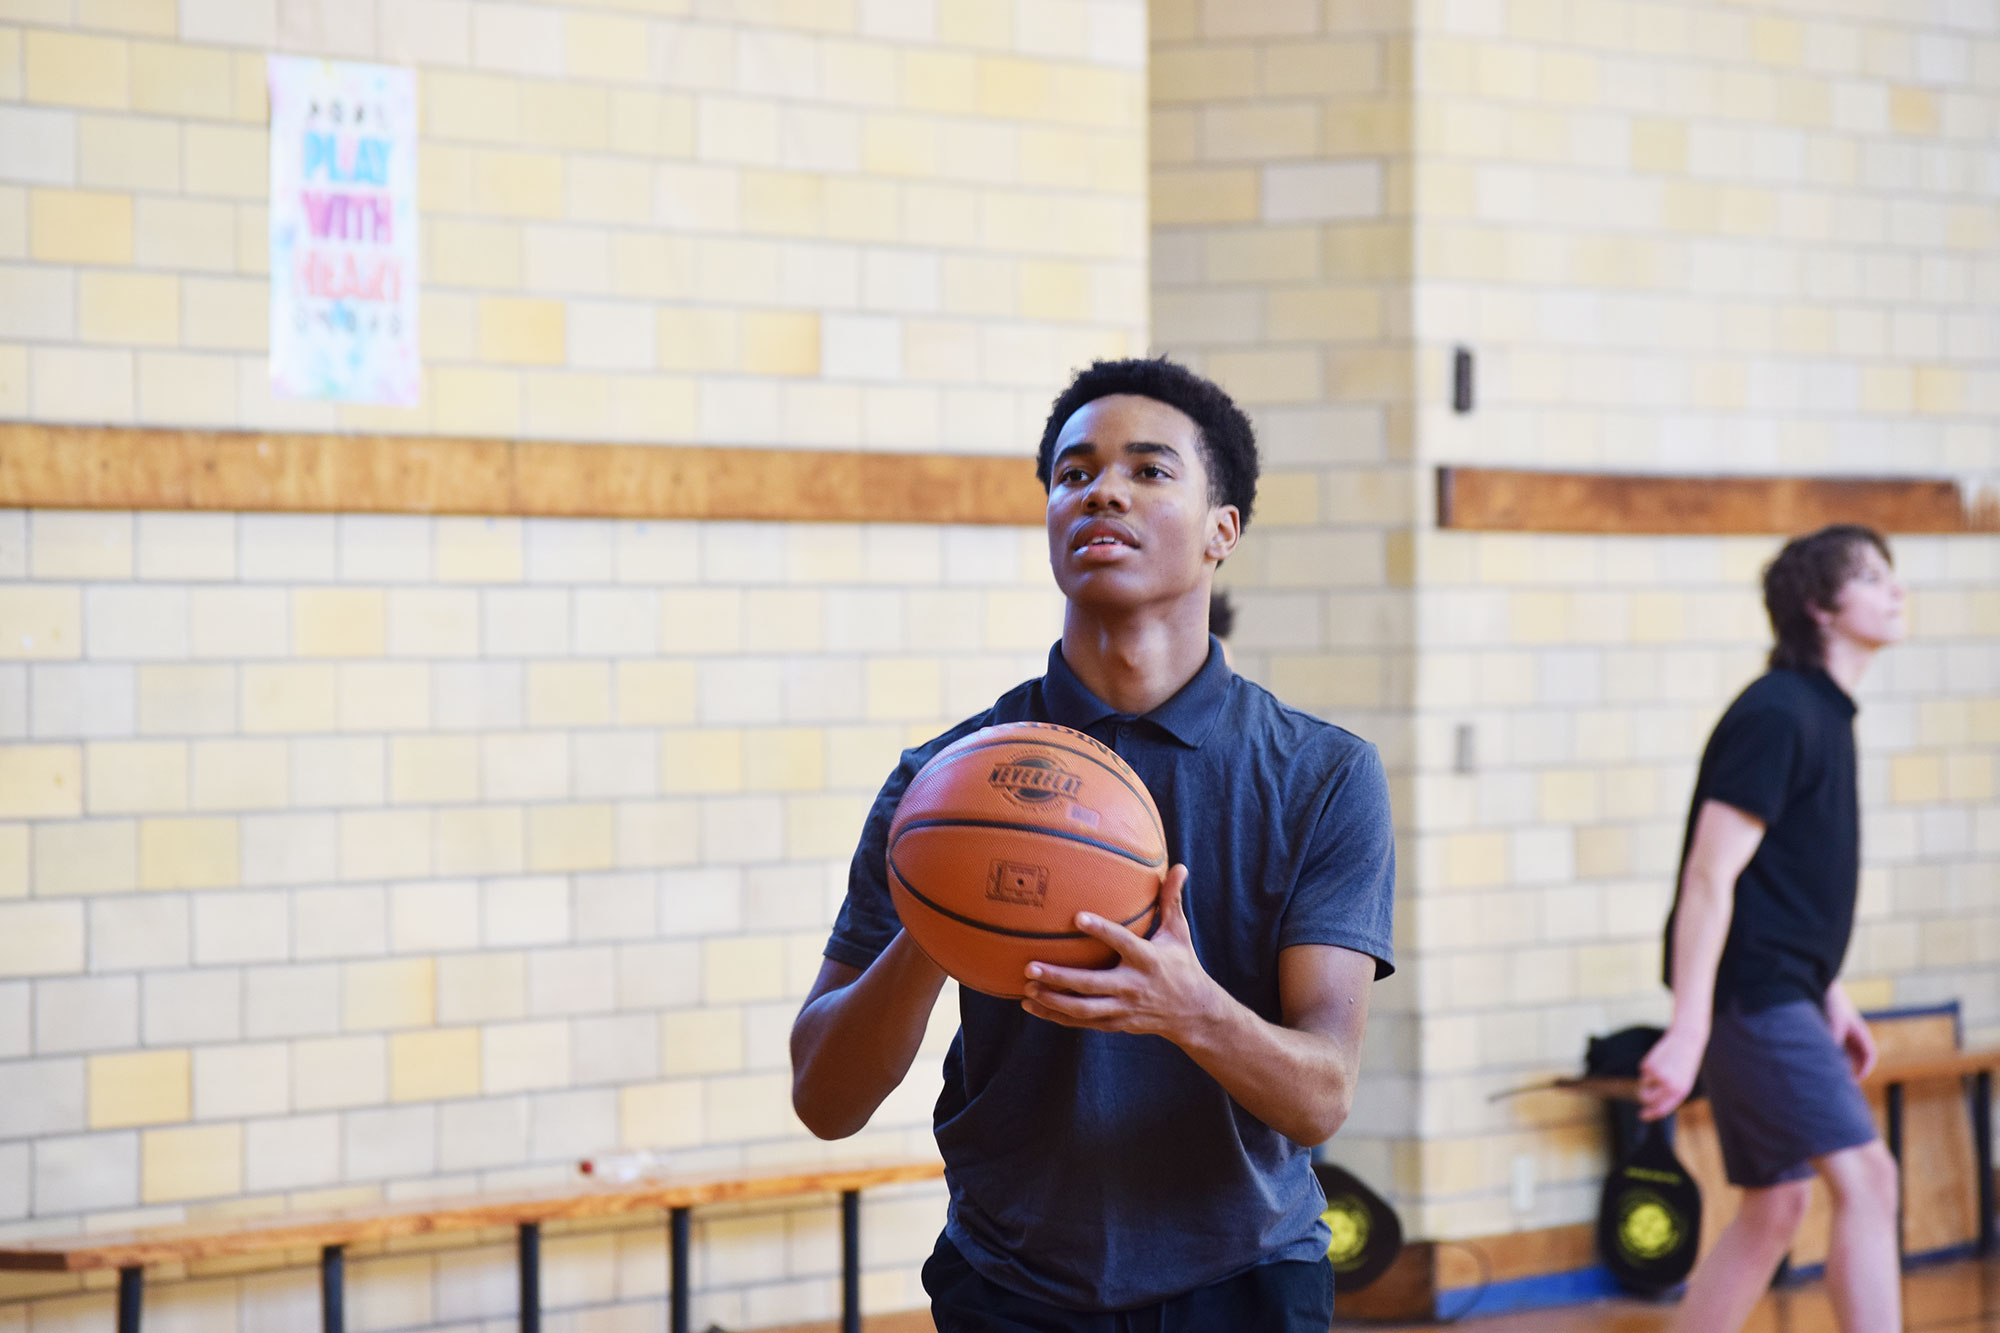 A student playing basketball